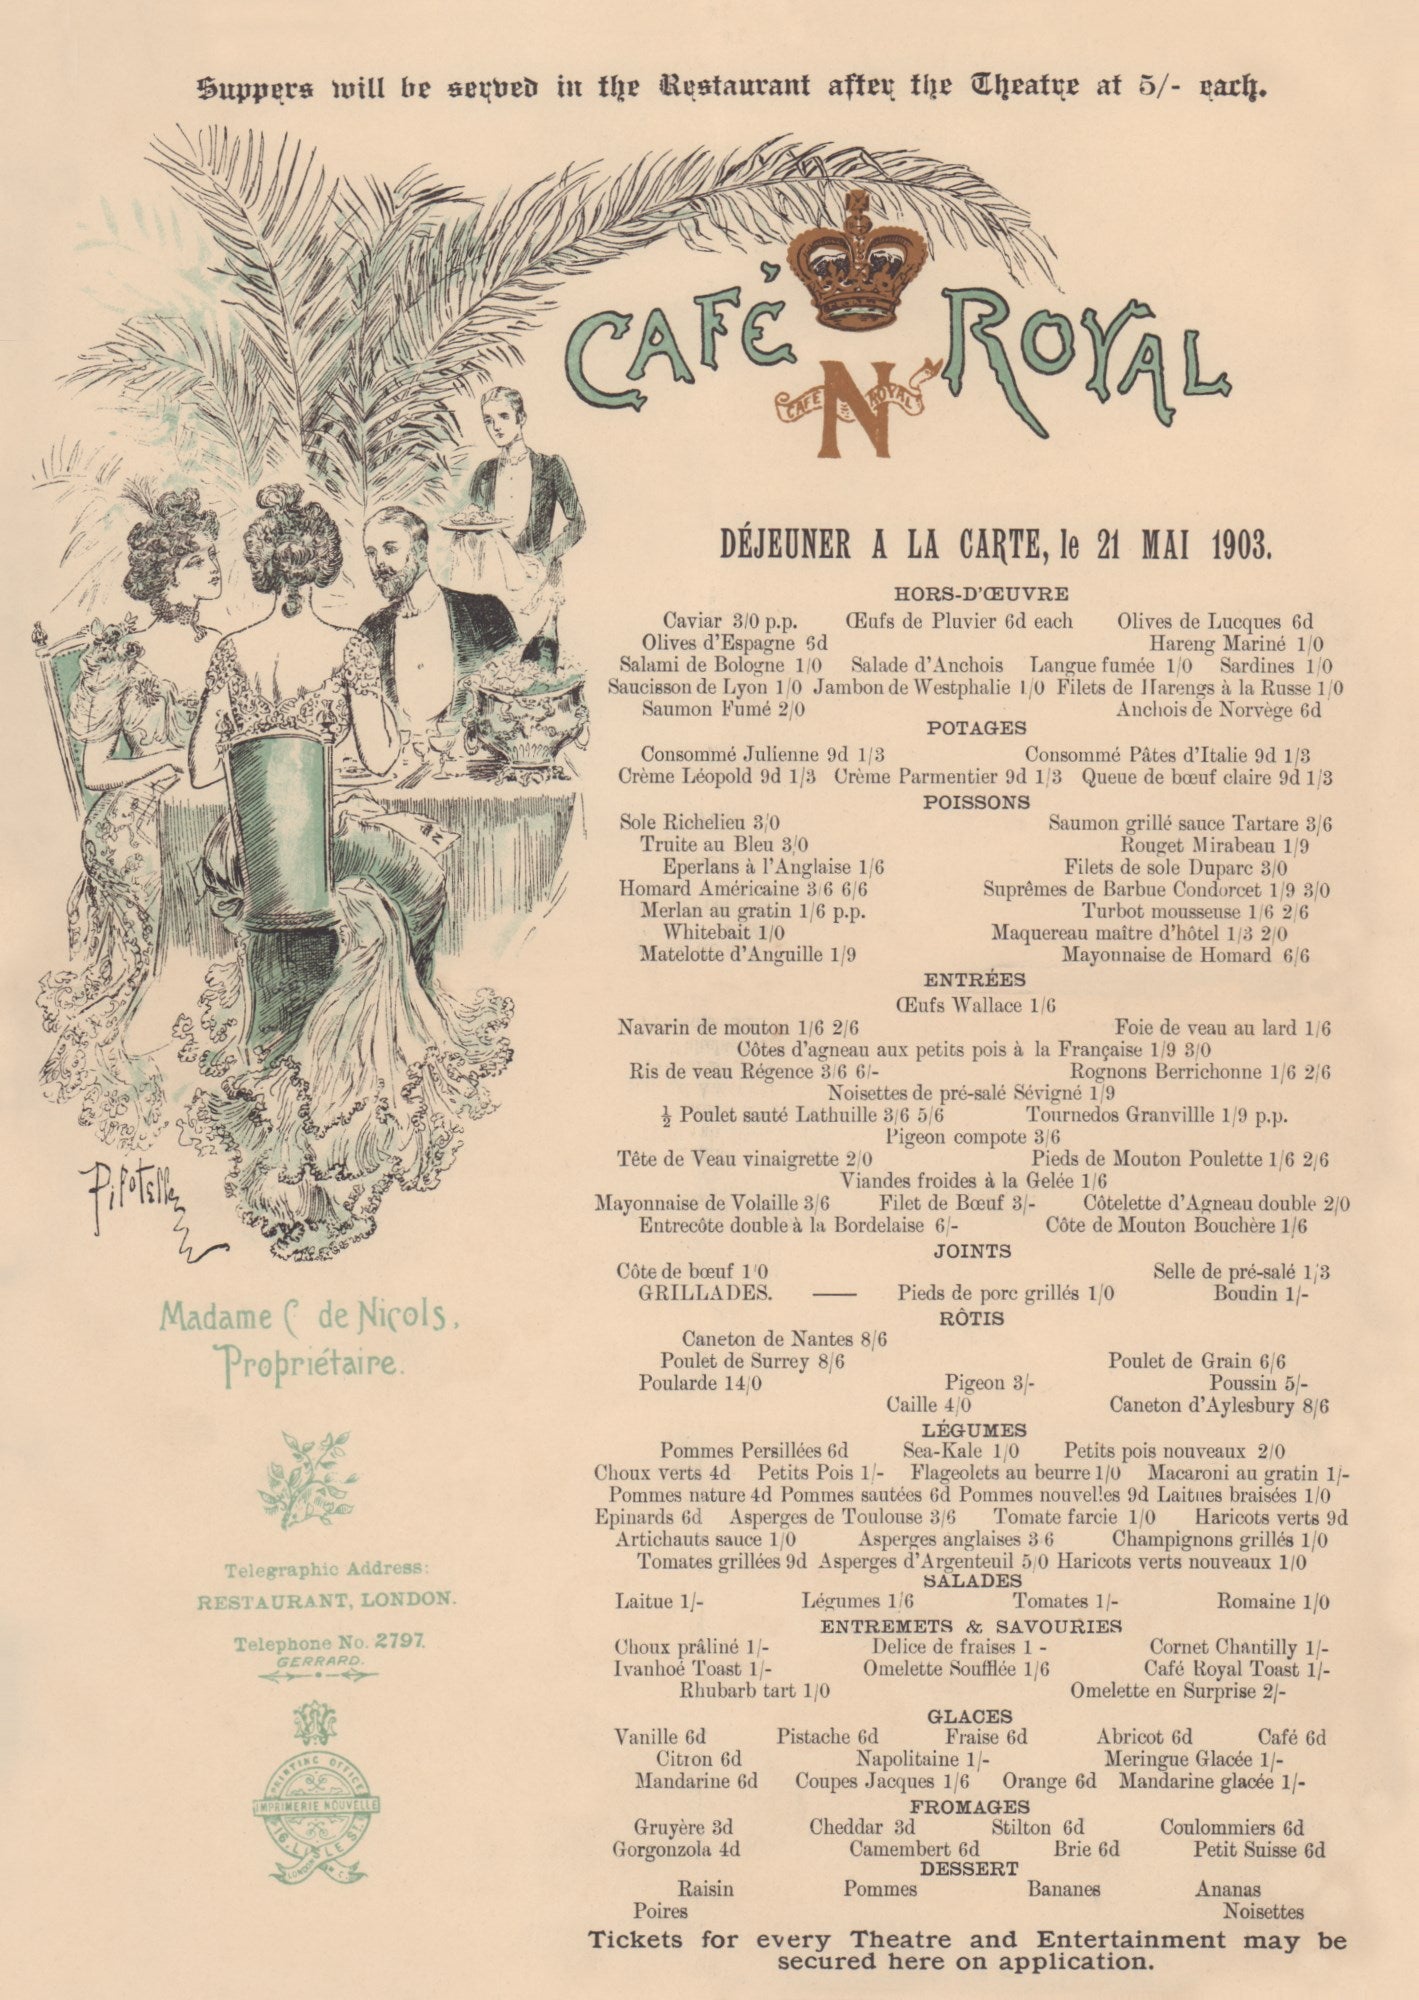 Café Royal, London 1903